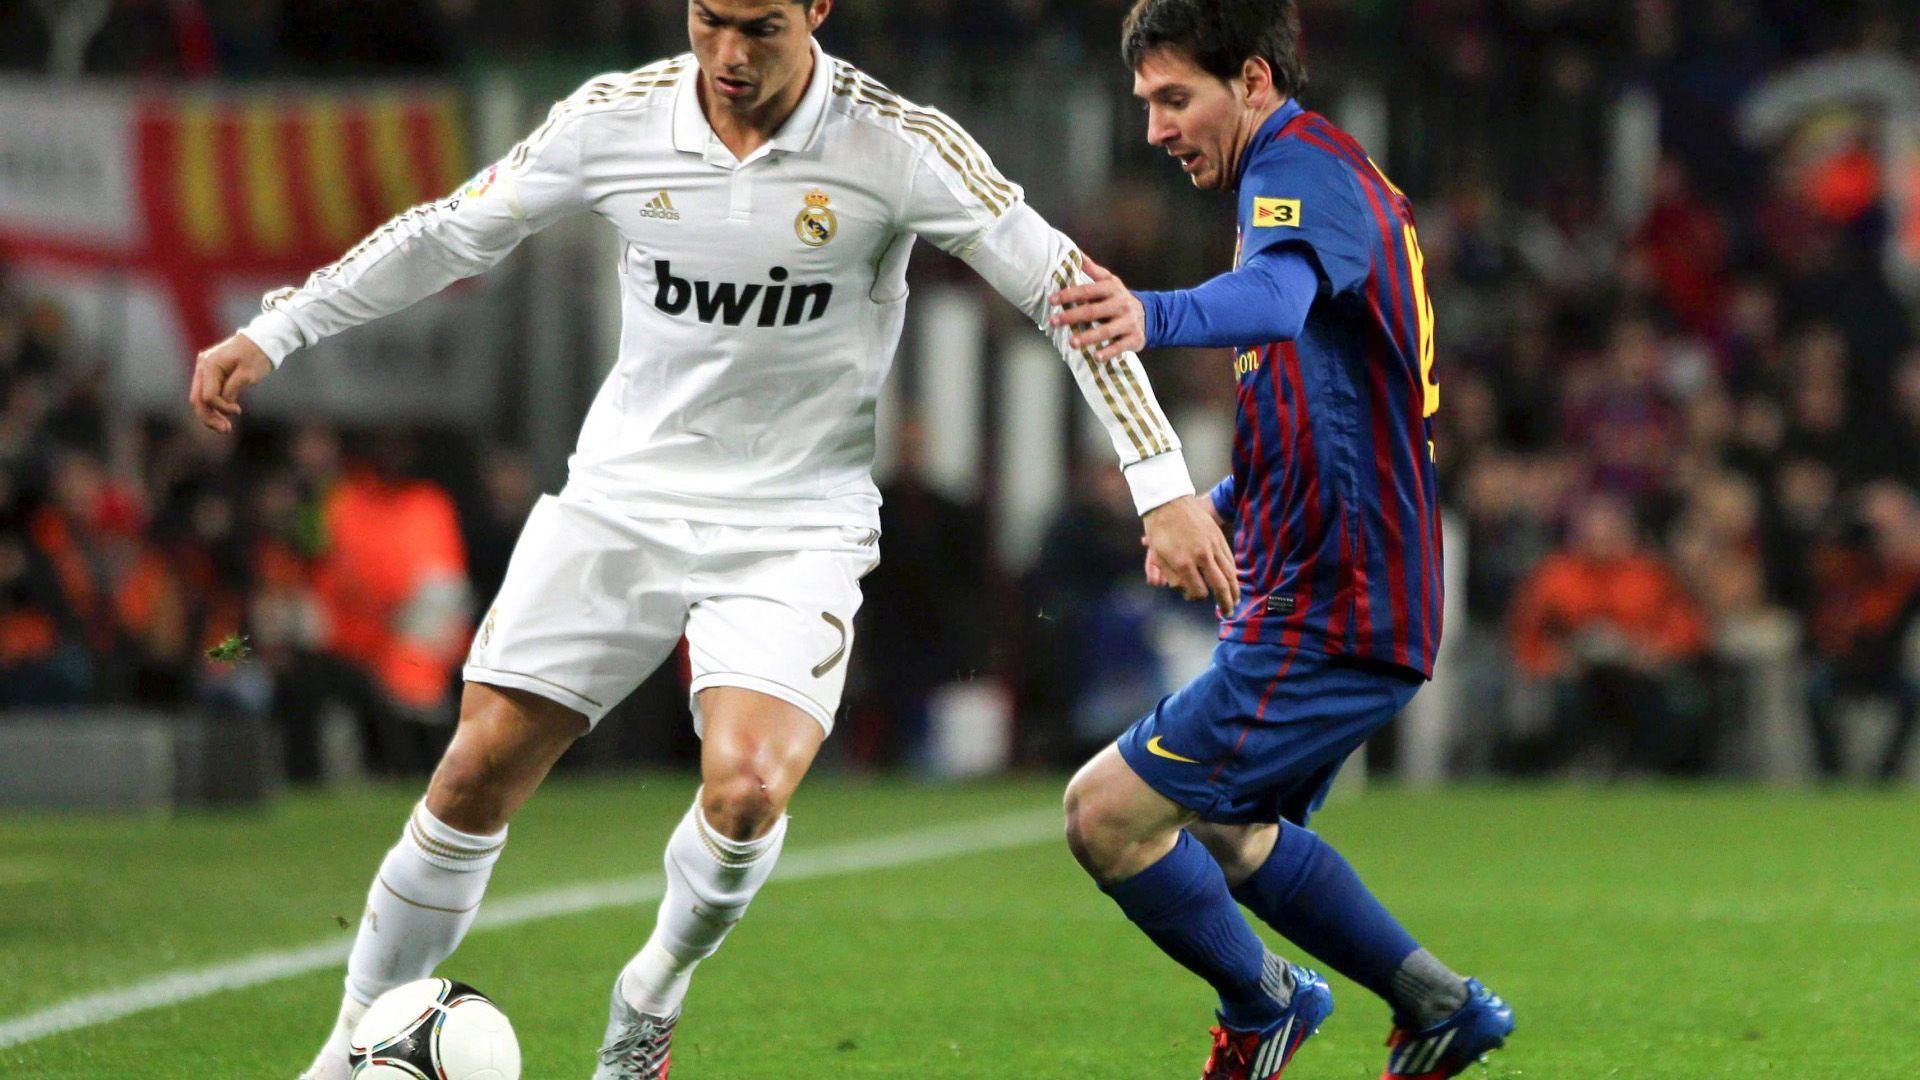 Messi Vs Ronaldo Wallpaper: Players, Teams, Leagues